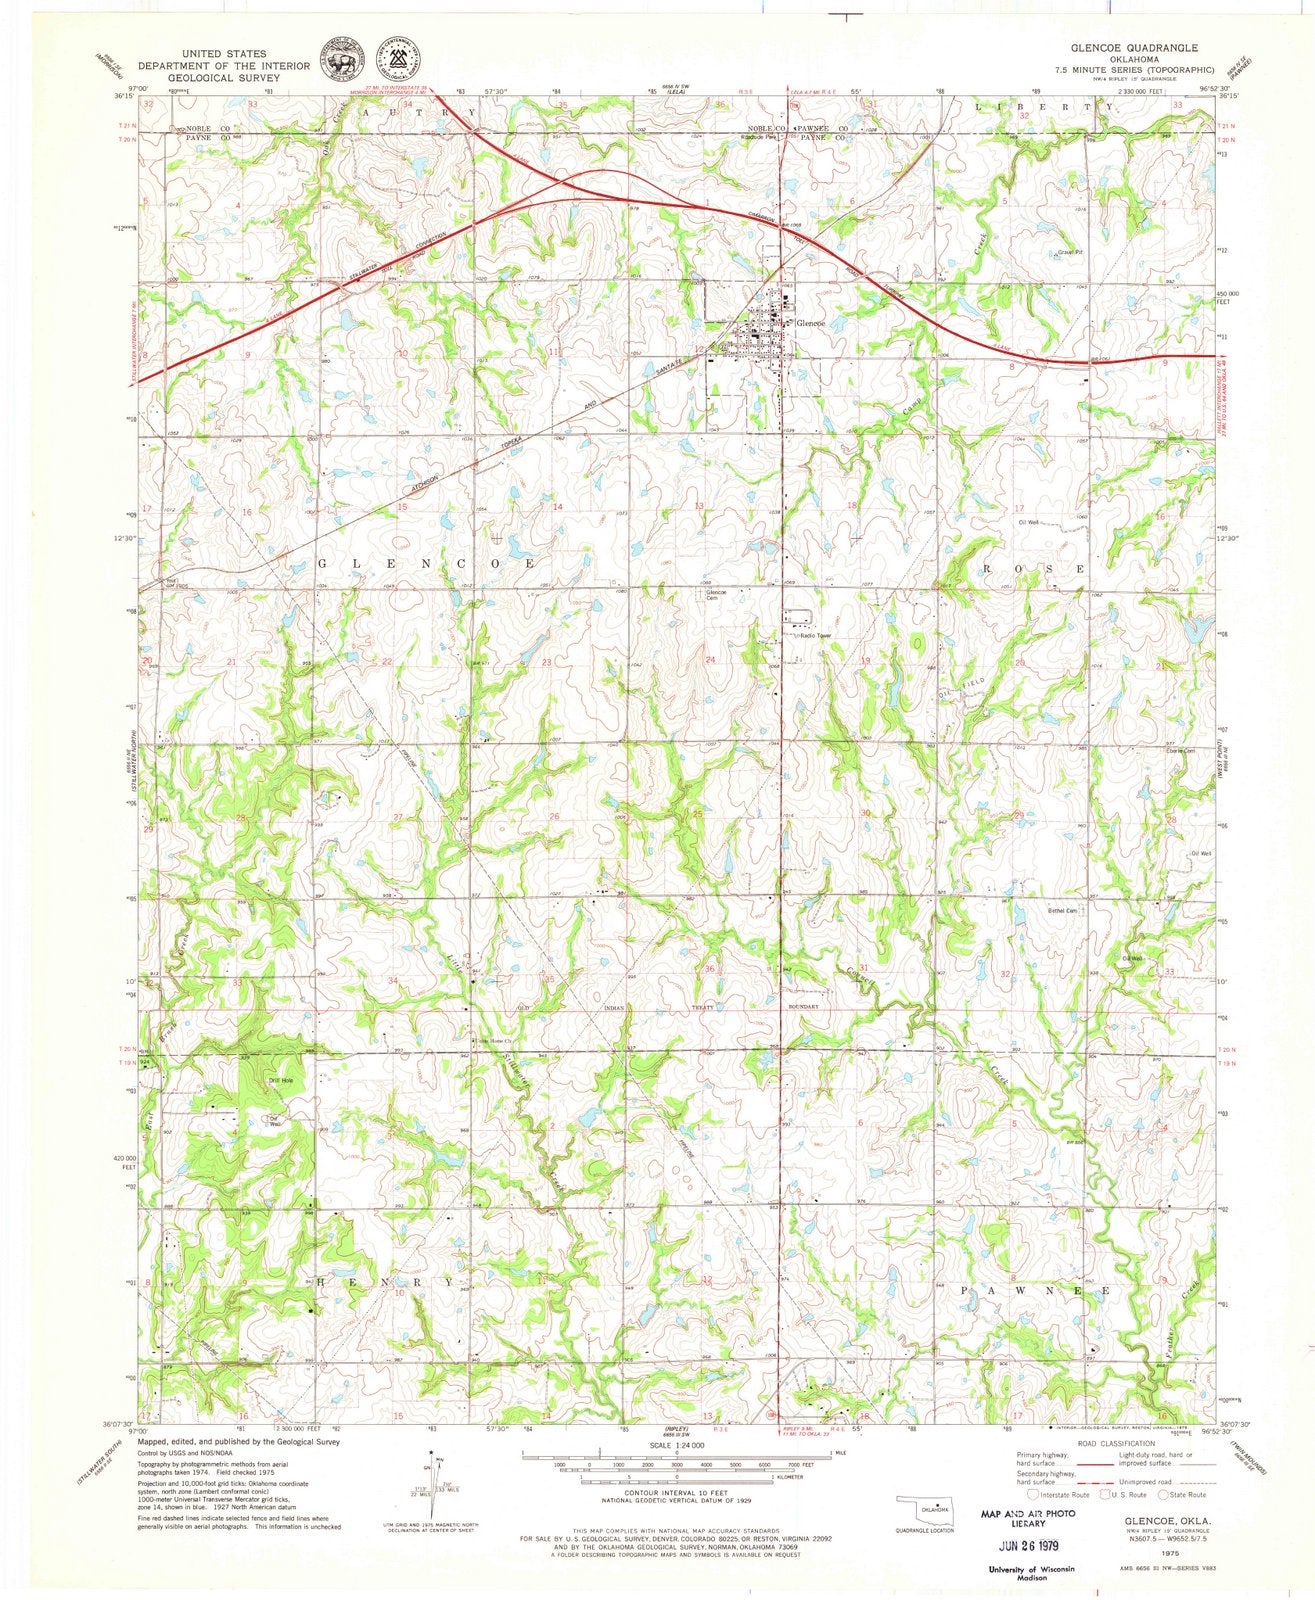 1975 Glencoe, OK - Oklahoma - USGS Topographic Map